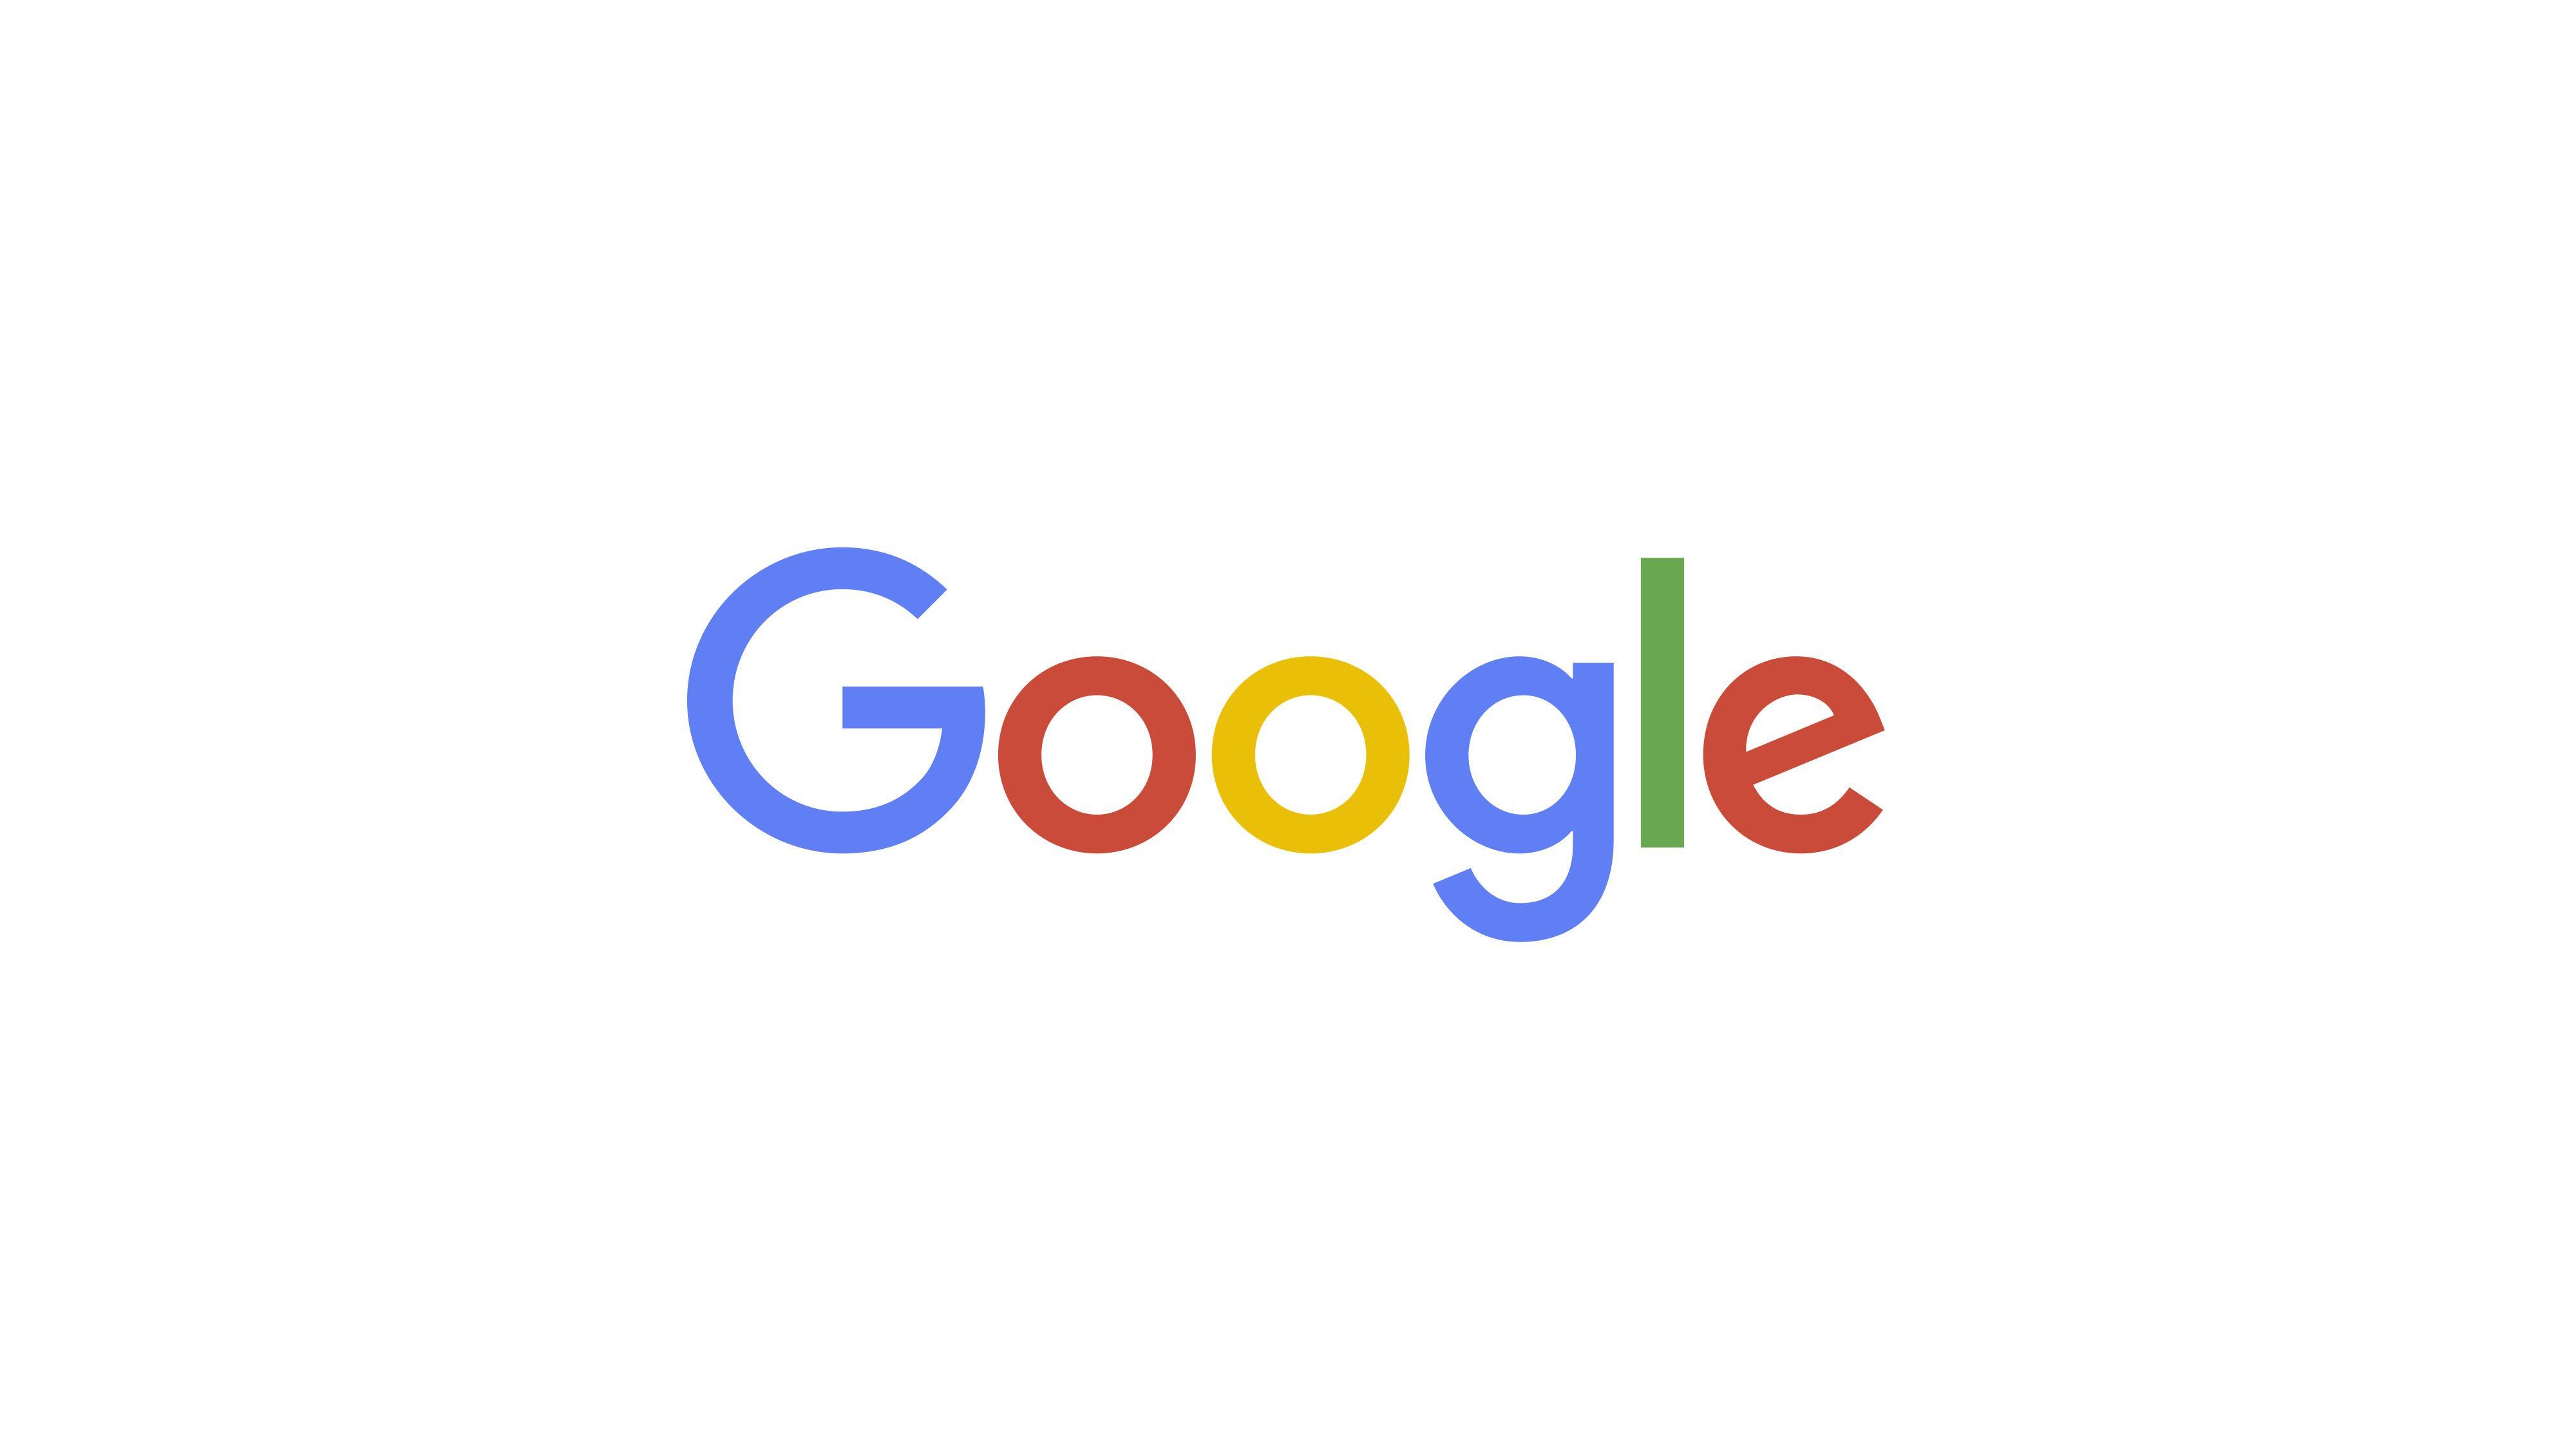 Google Chrome New Logo - Love It or Hate It? Google's Redesigned Logo